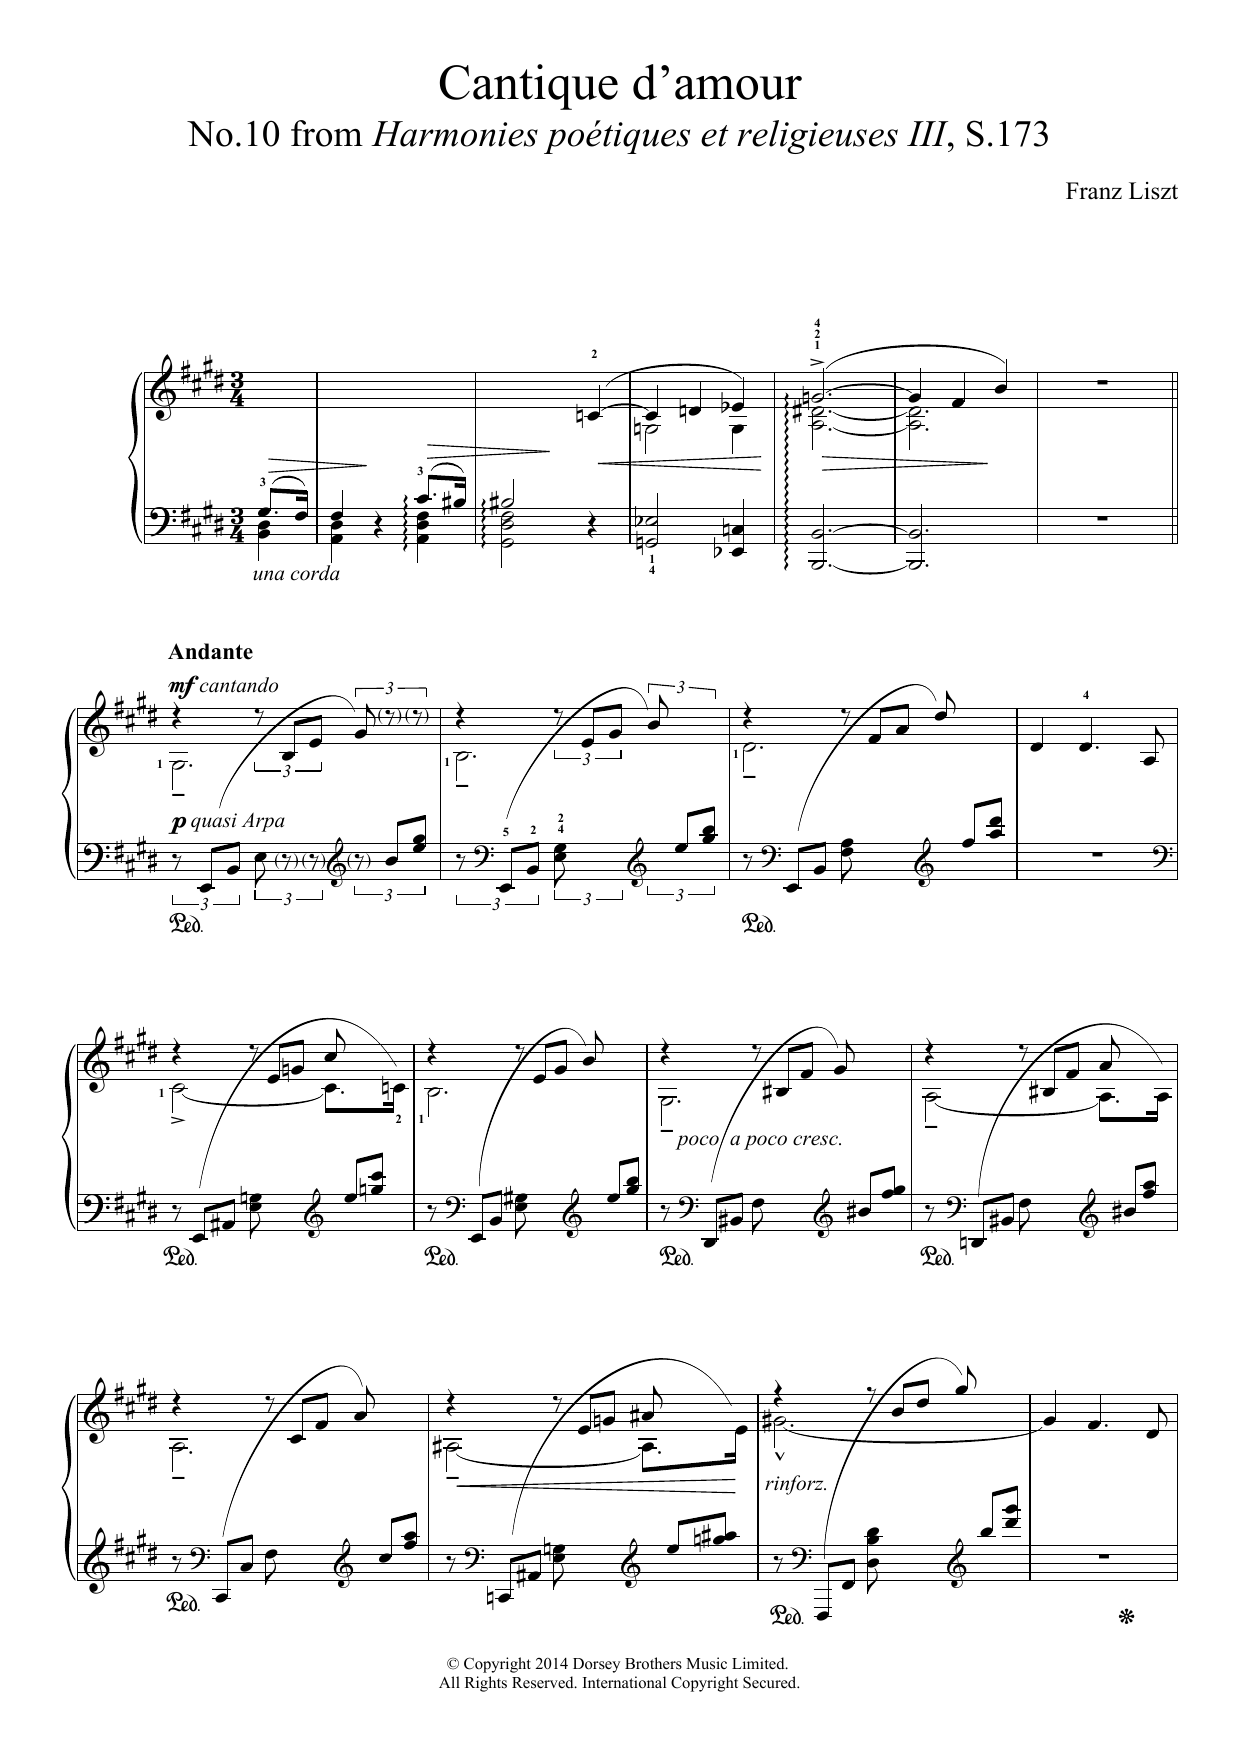 Franz Liszt Harmonies Poétiques Et Réligieuses For Piano No.10: Cantique D'amour sheet music notes and chords arranged for Piano Solo